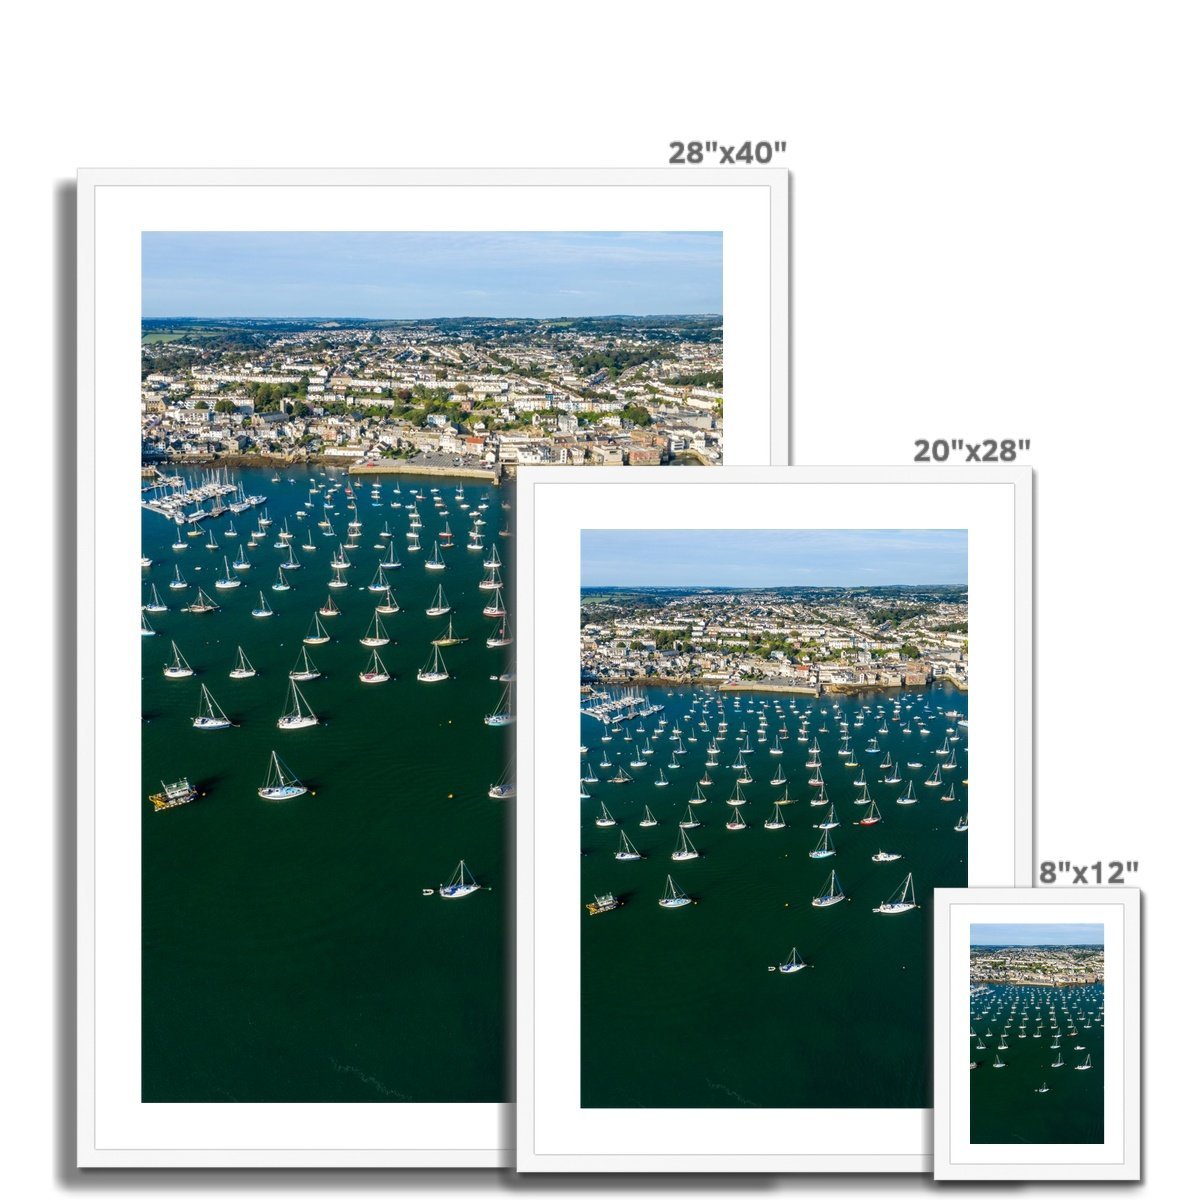 falmouth sailing boats frame sizes